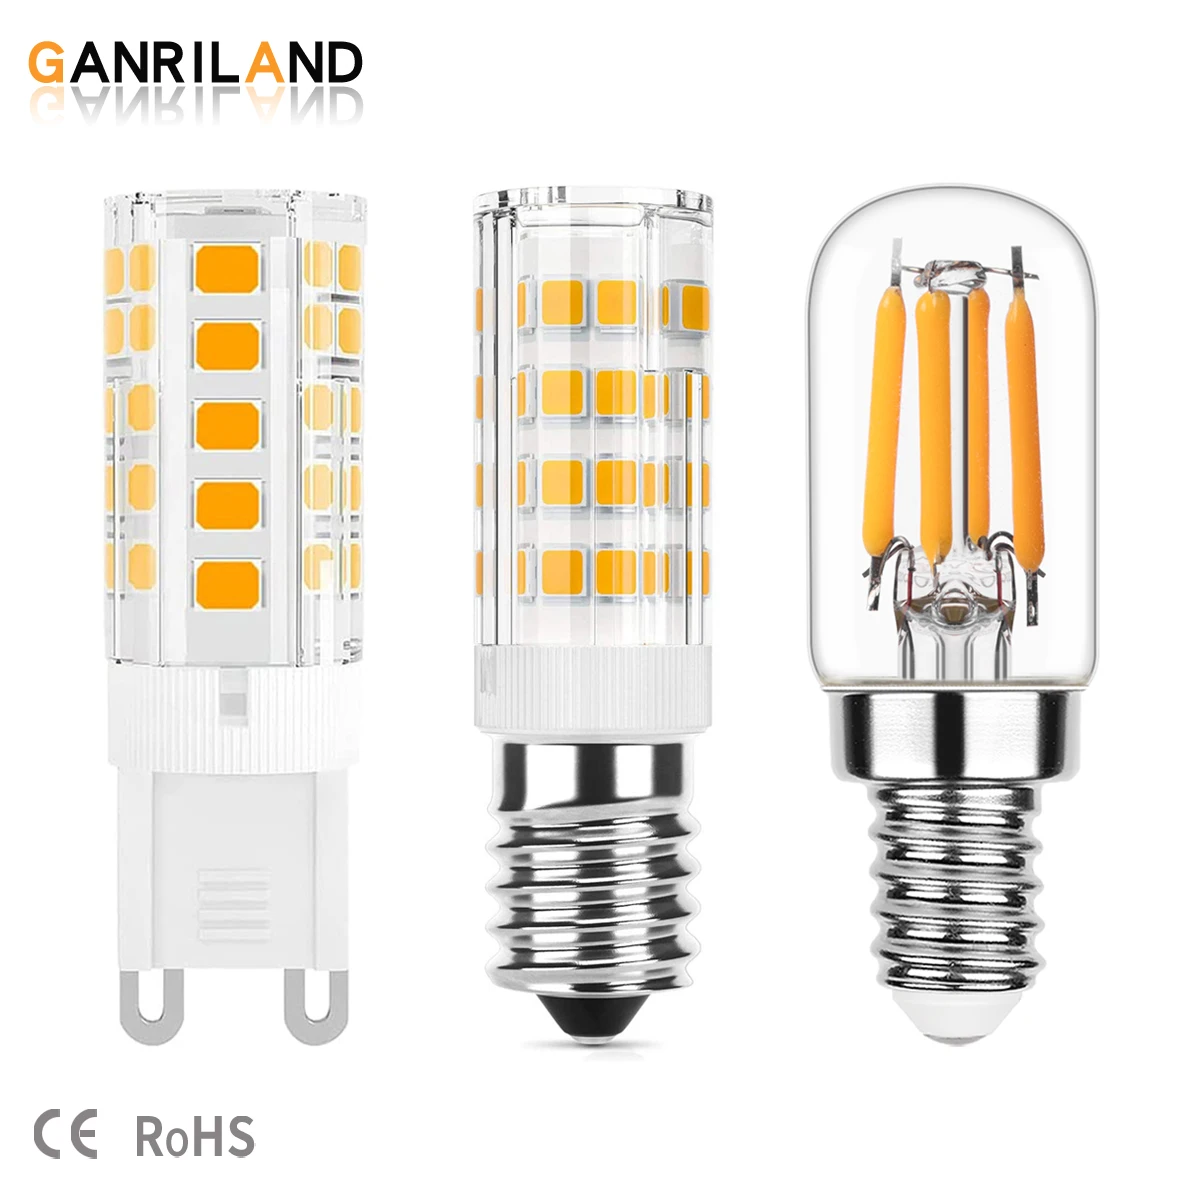 GANRILAND G9 LED Lamp Bulb E14 220V LED Corn Bulb 3W 5W 3000K 6000K Silica Gel Bombilla SMD2835 Replace Halogen Chandelier Light